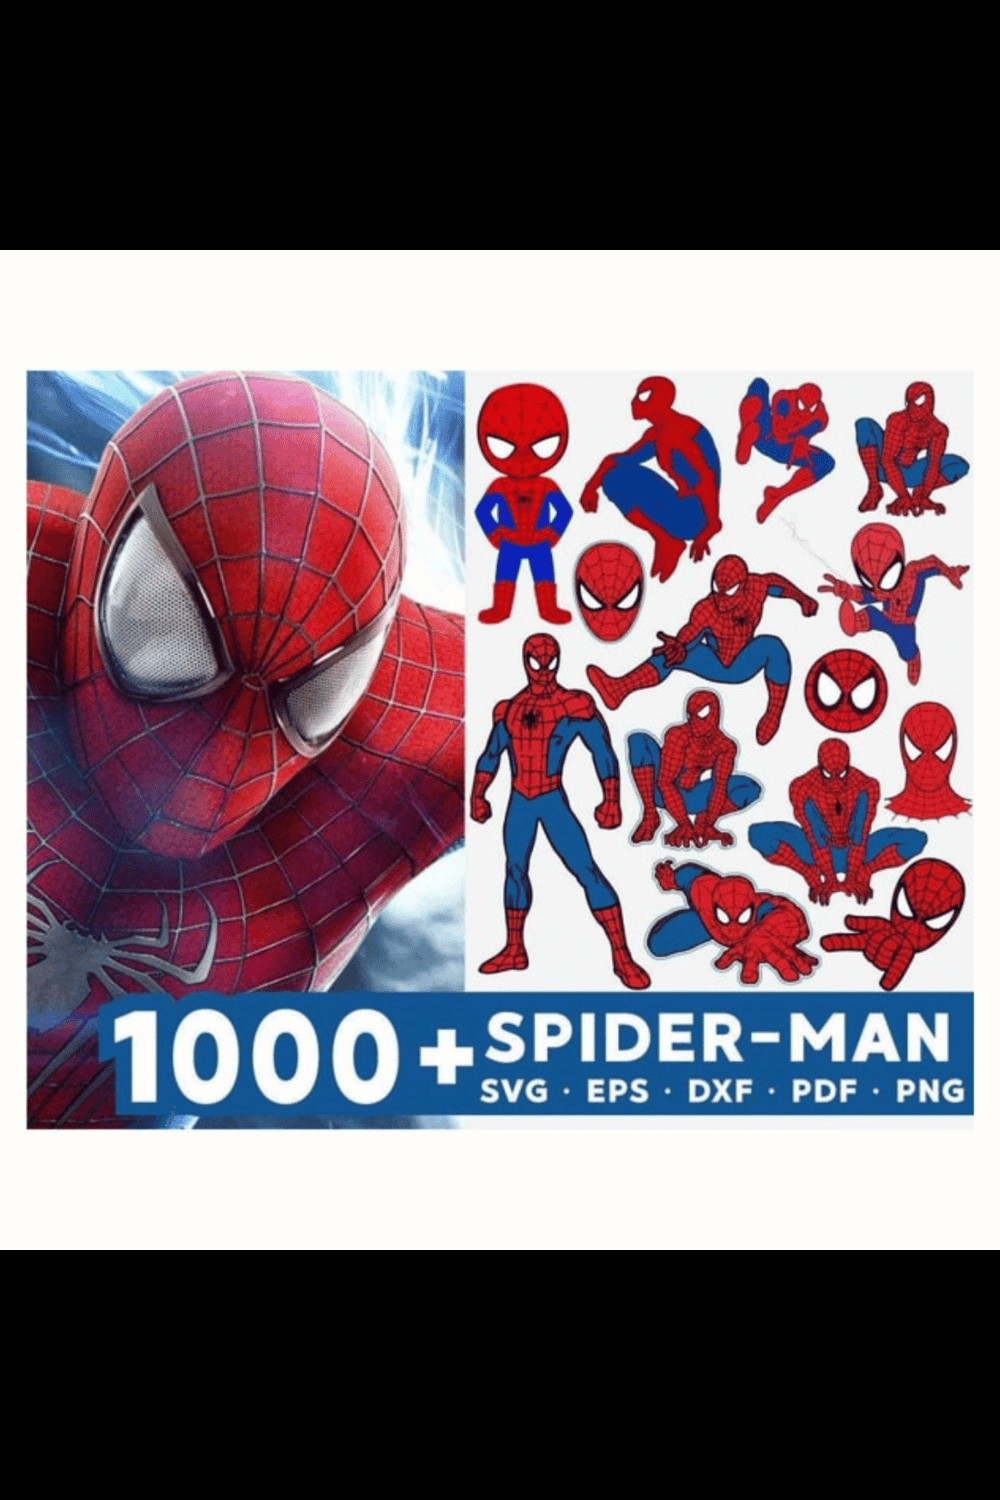 Spiderman SVG, Spiderman Symbol, Spiderman Logo, Spiderman Silhouette, Spiderman PNG, Spiderman Transparent pinterest preview image.